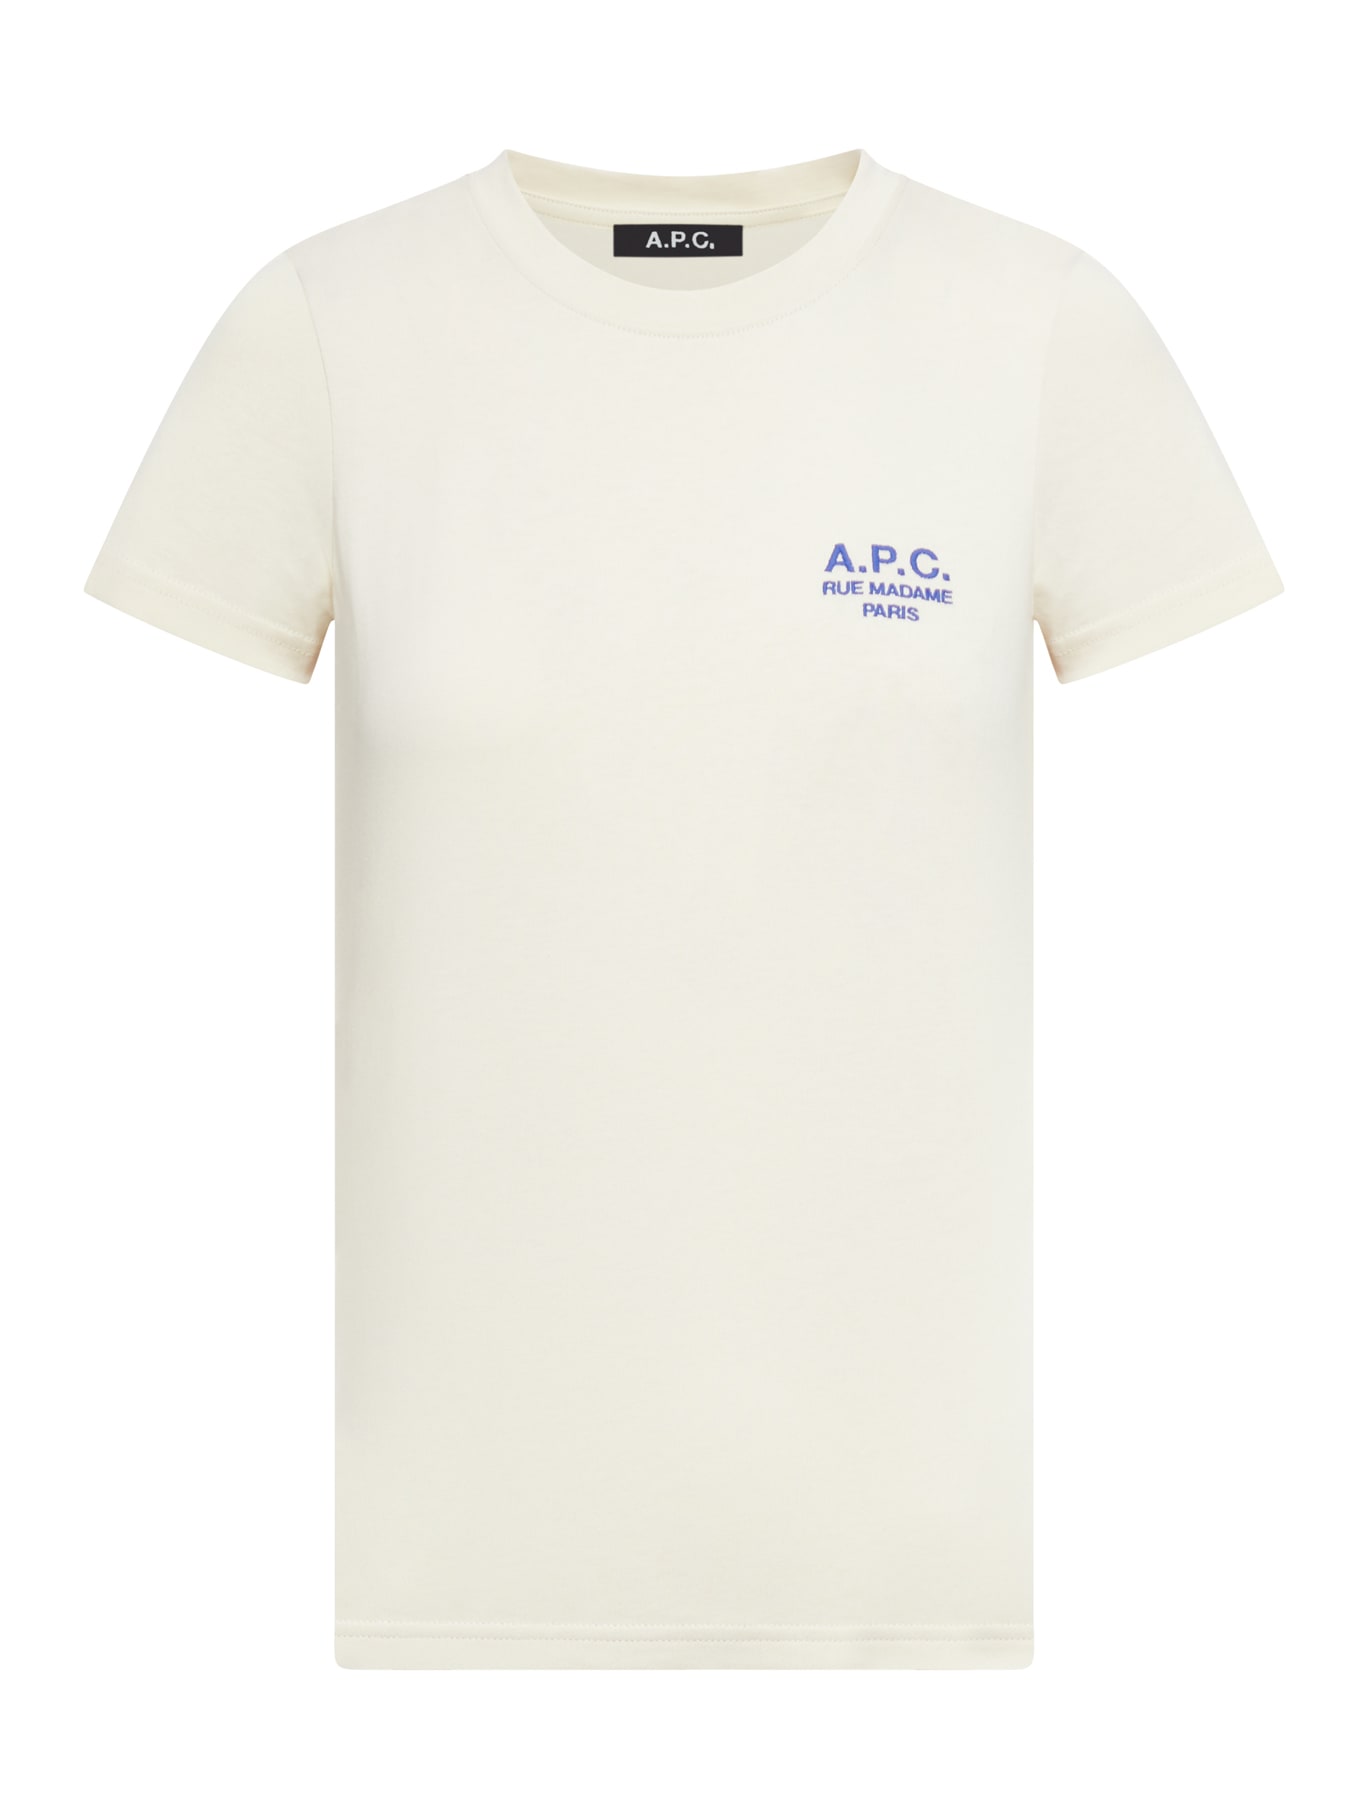 Apc T-shirt Denise In Taj Blanc Casse Bleu